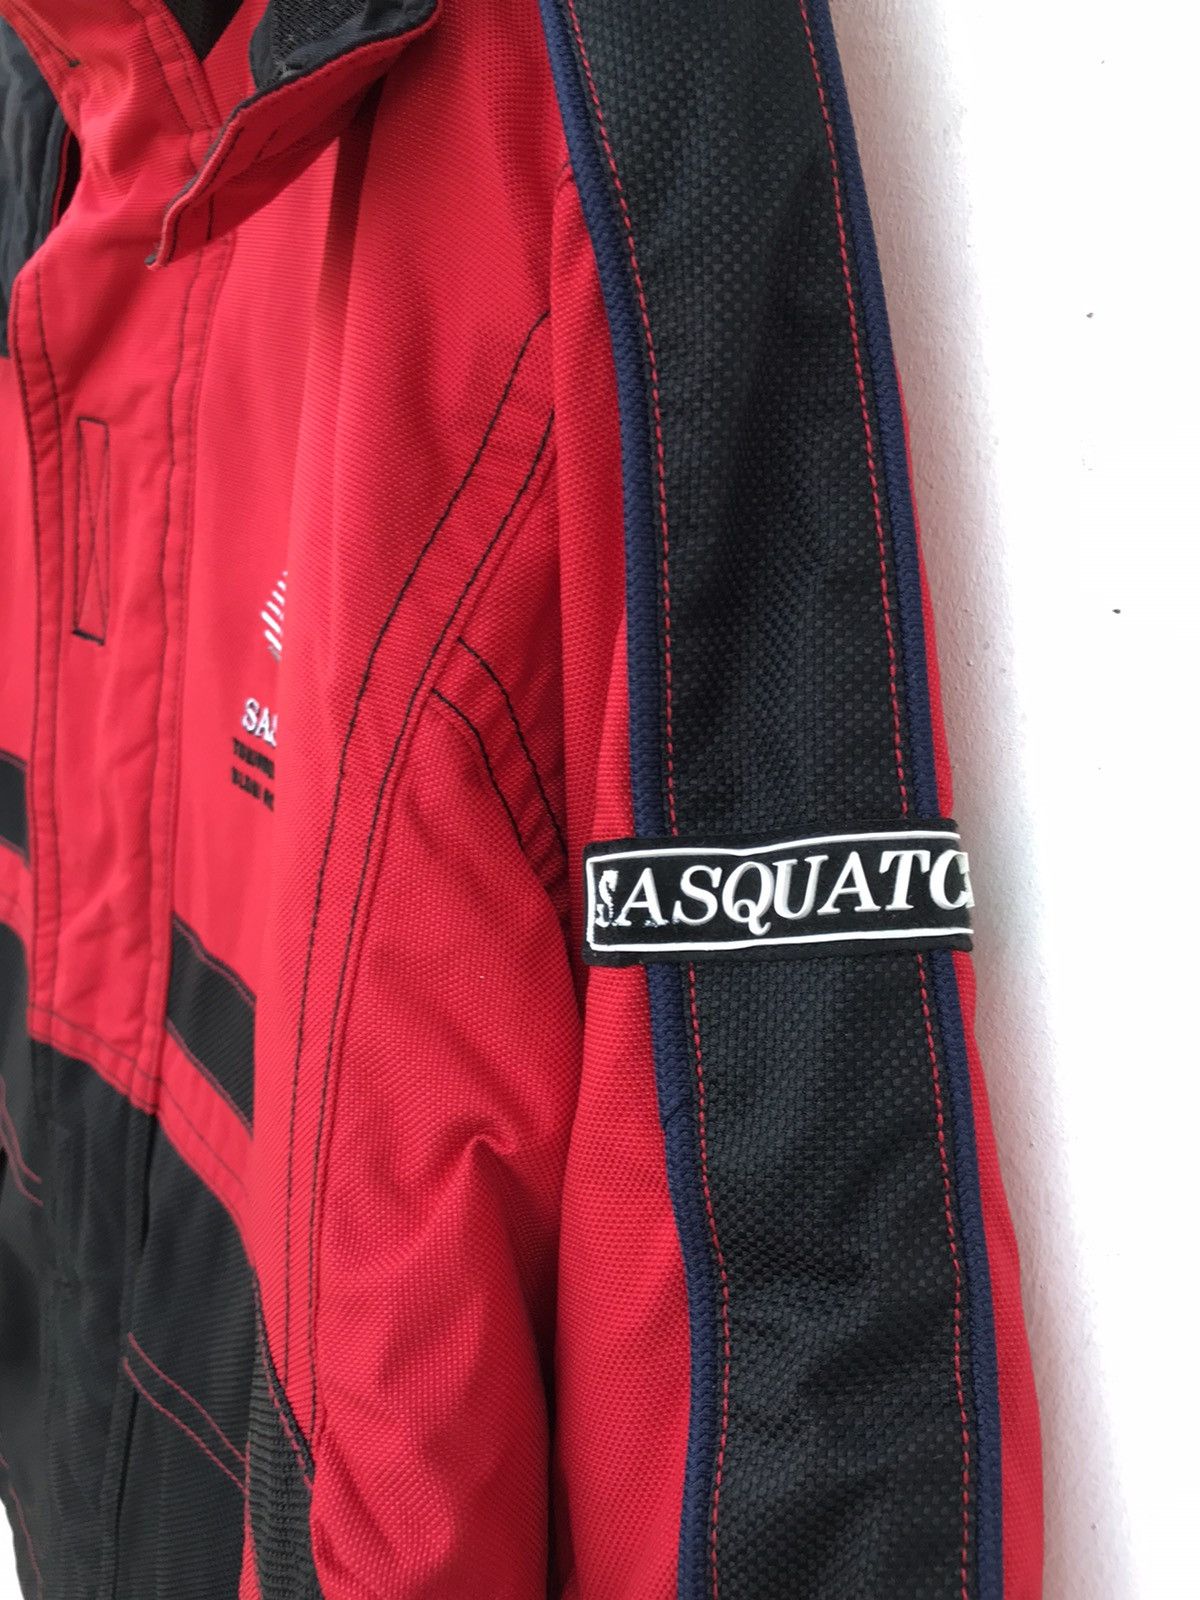 Sasquatch Ski One Set Jacket With Pants - 11